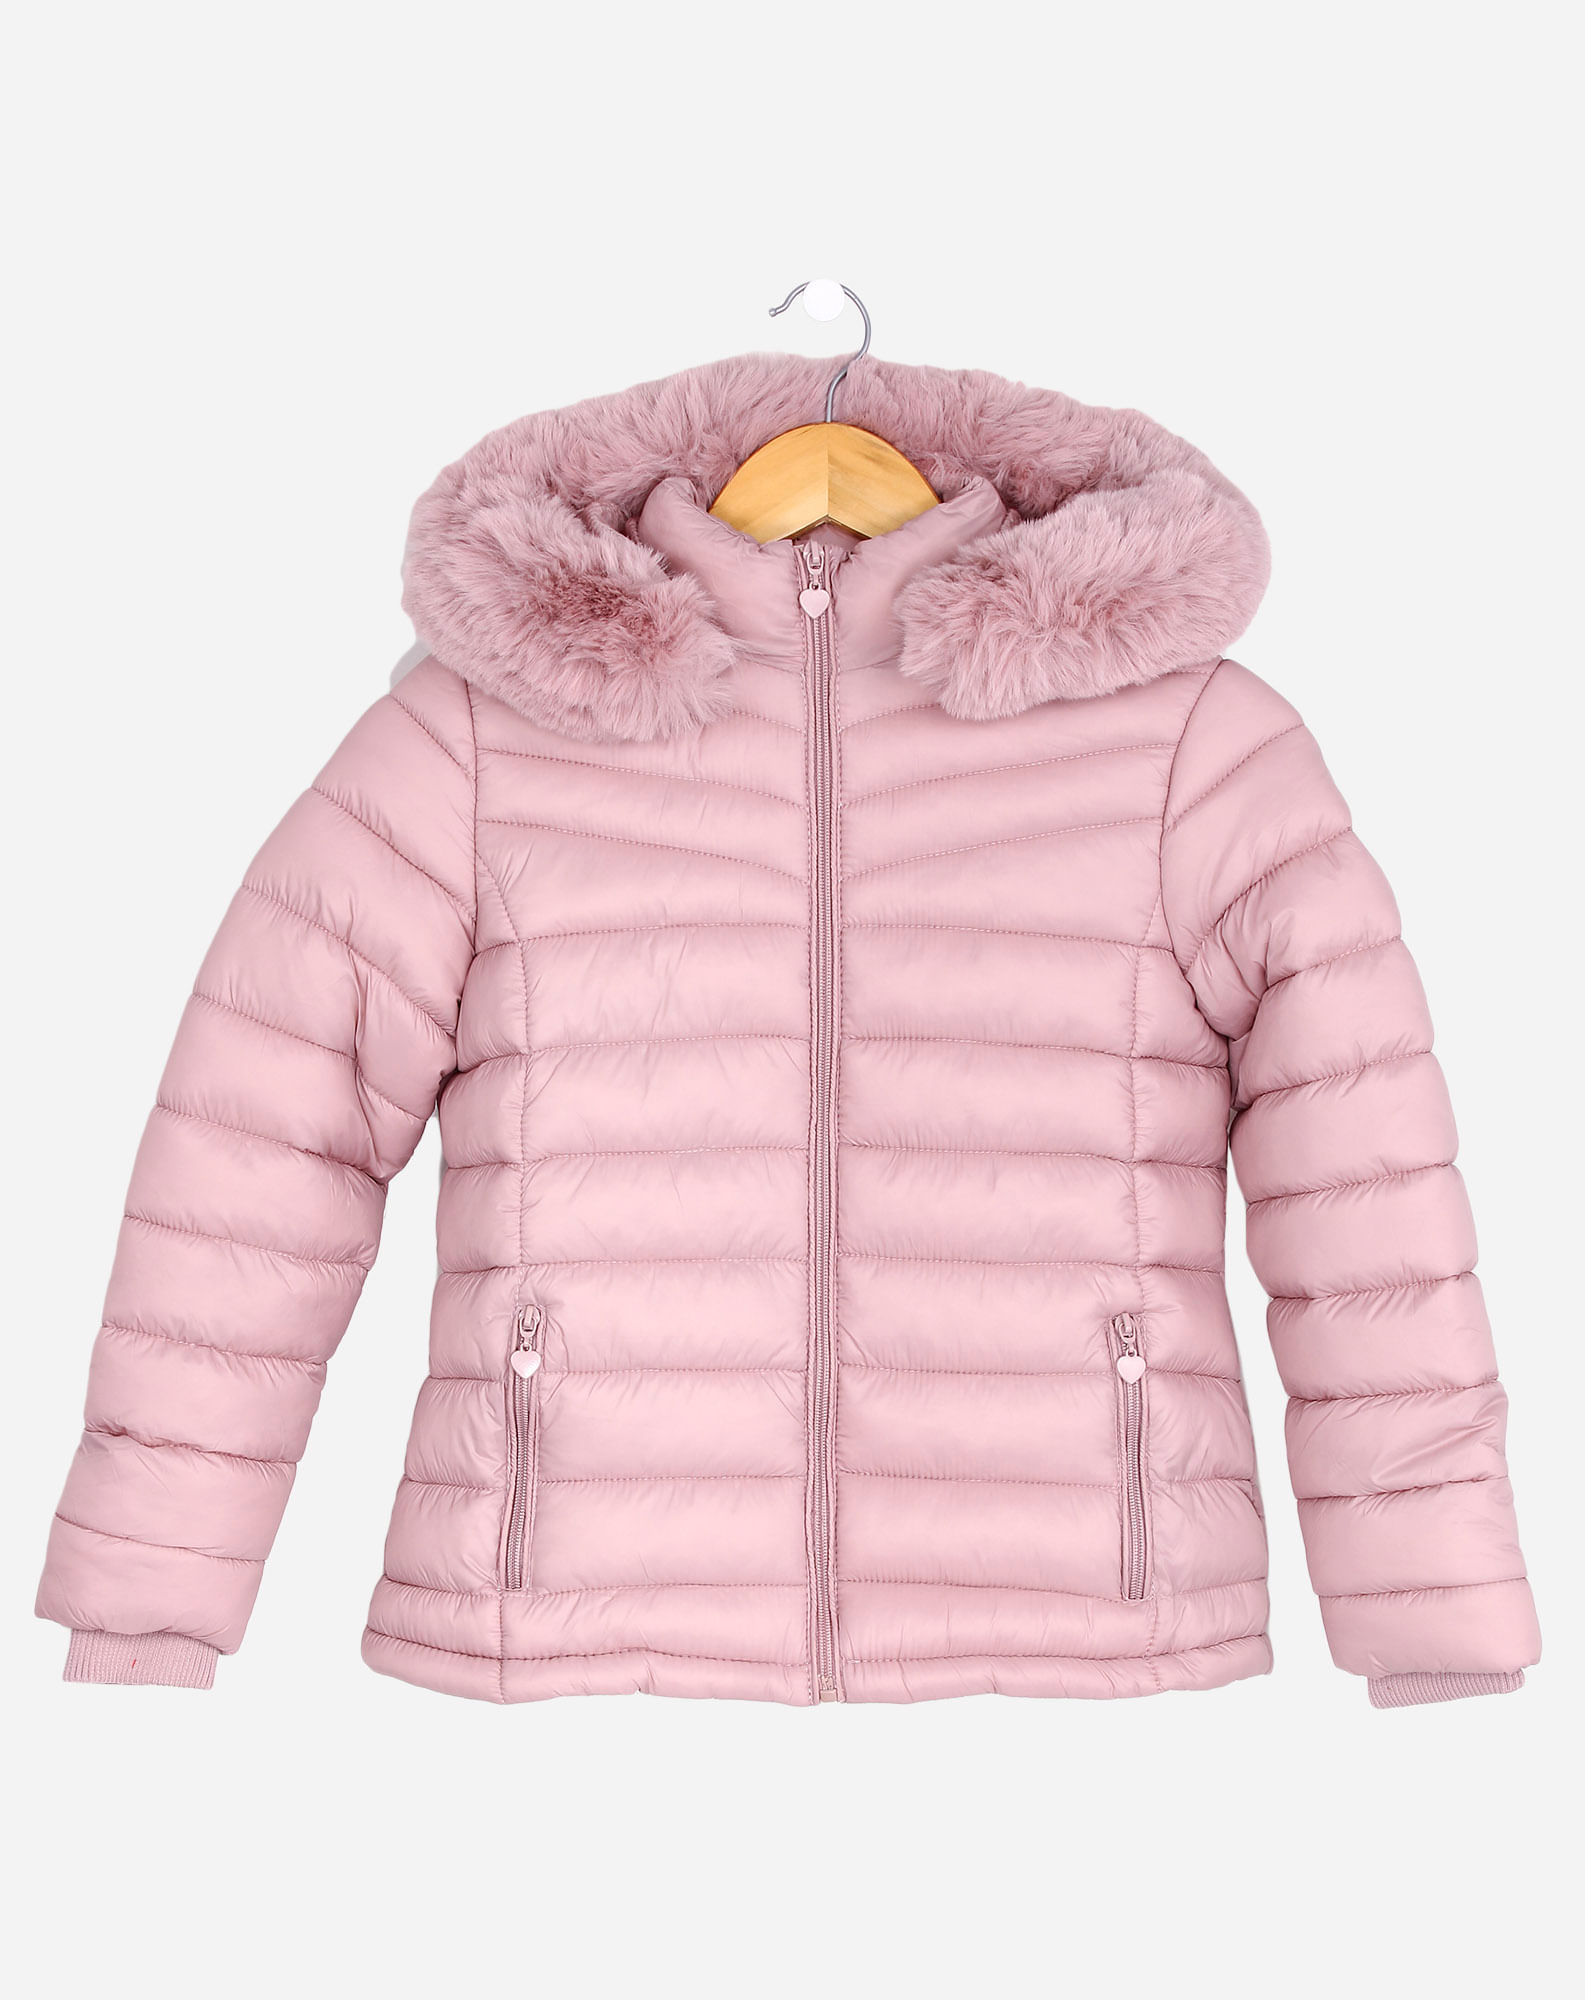 681371009 jaqueta puffer nylon infantil menina com capuz rosa claro 8 6f3